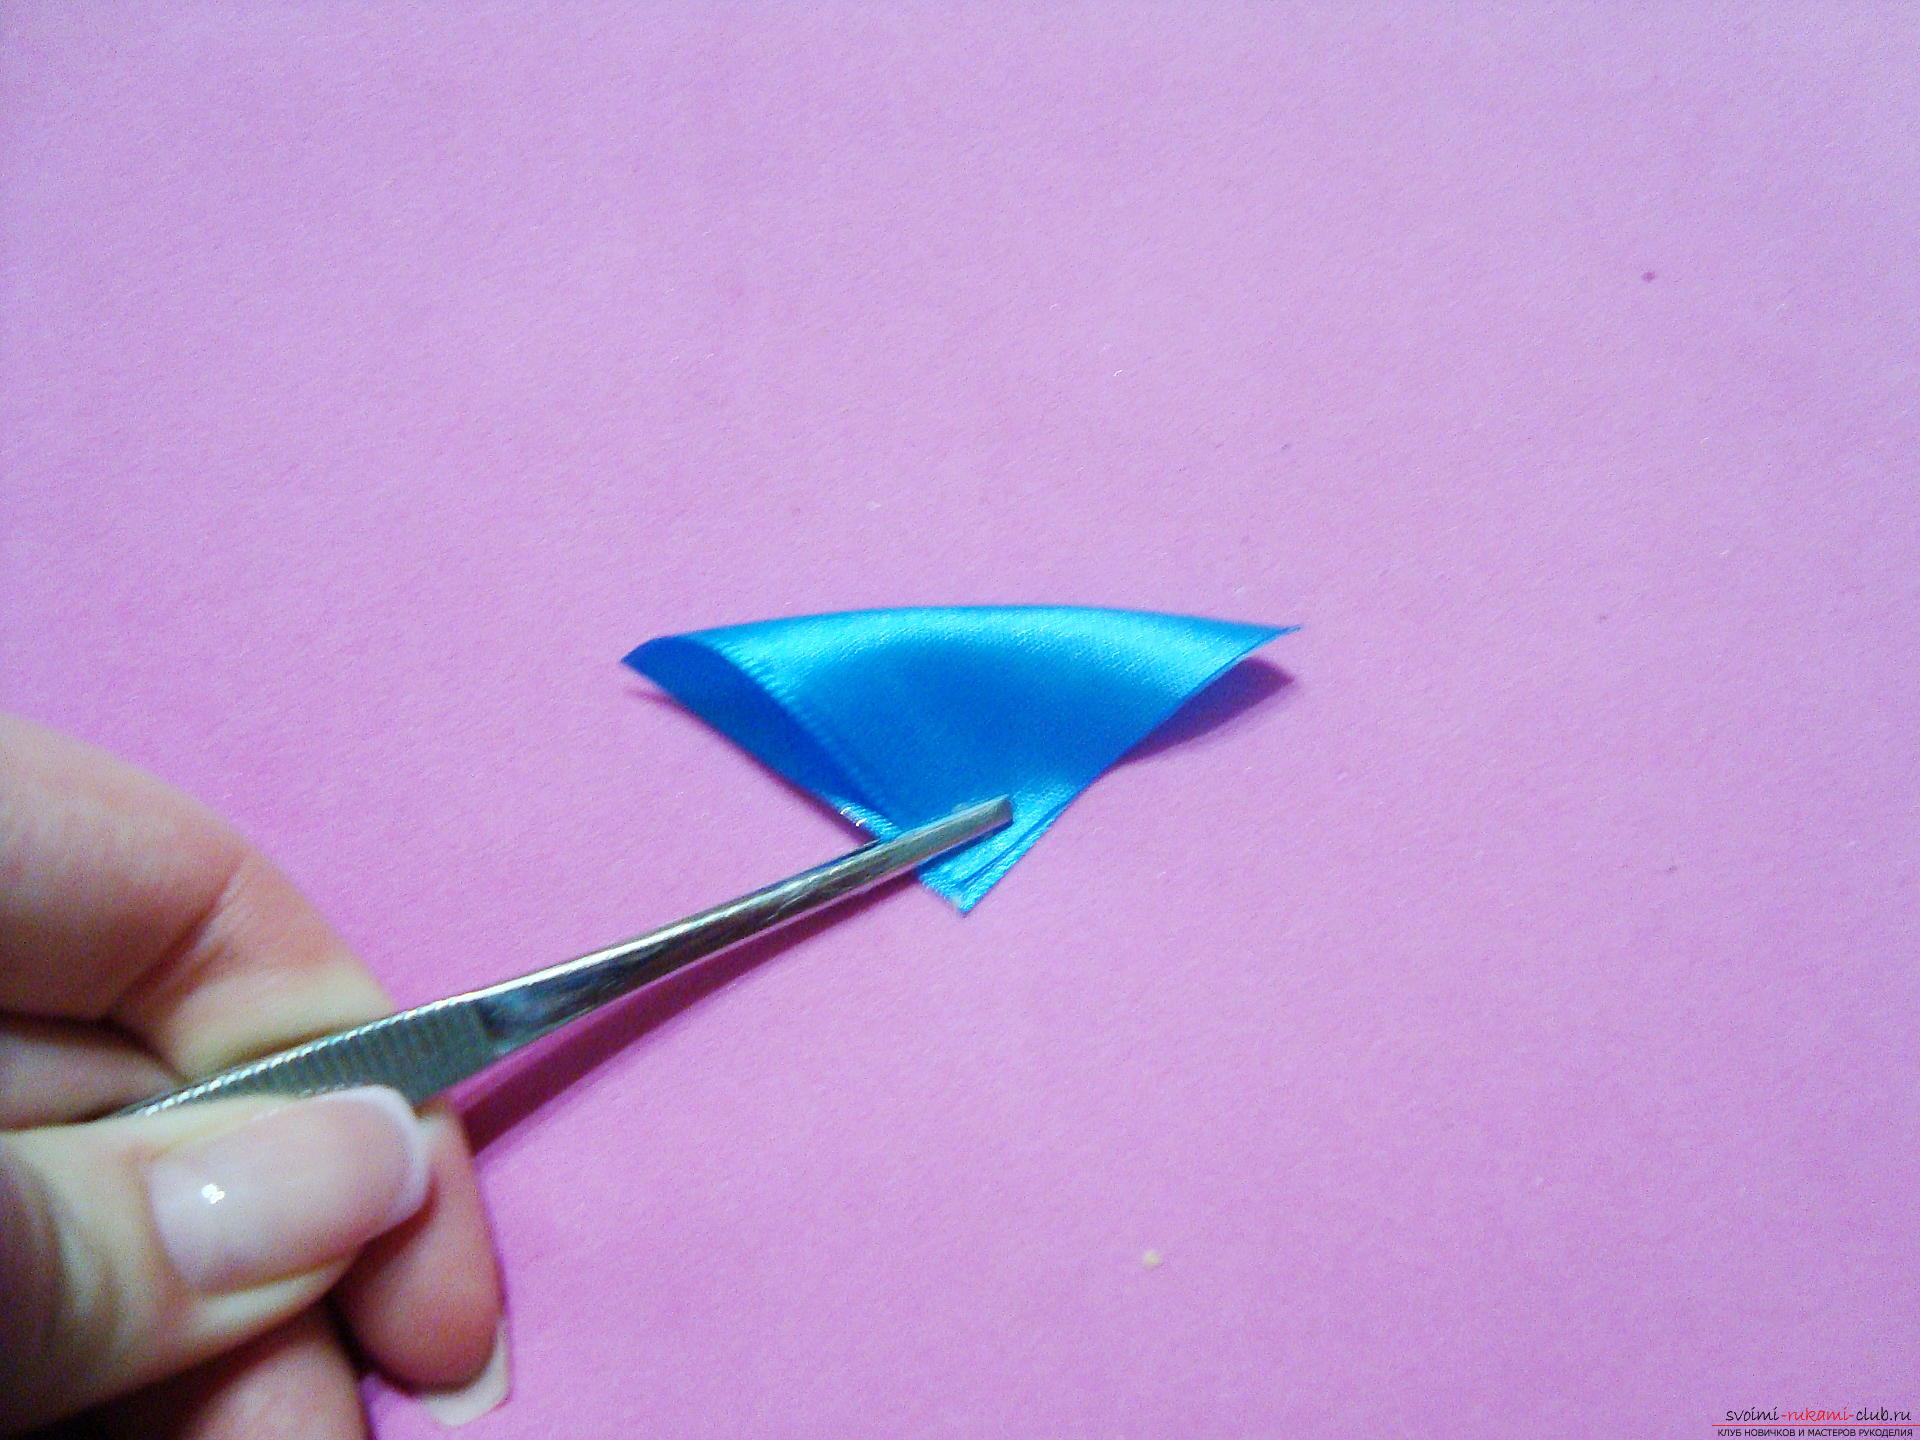 Фото инструкция по изготовлению заколки из лент голубого цвета в технике канзаши. Фото №8